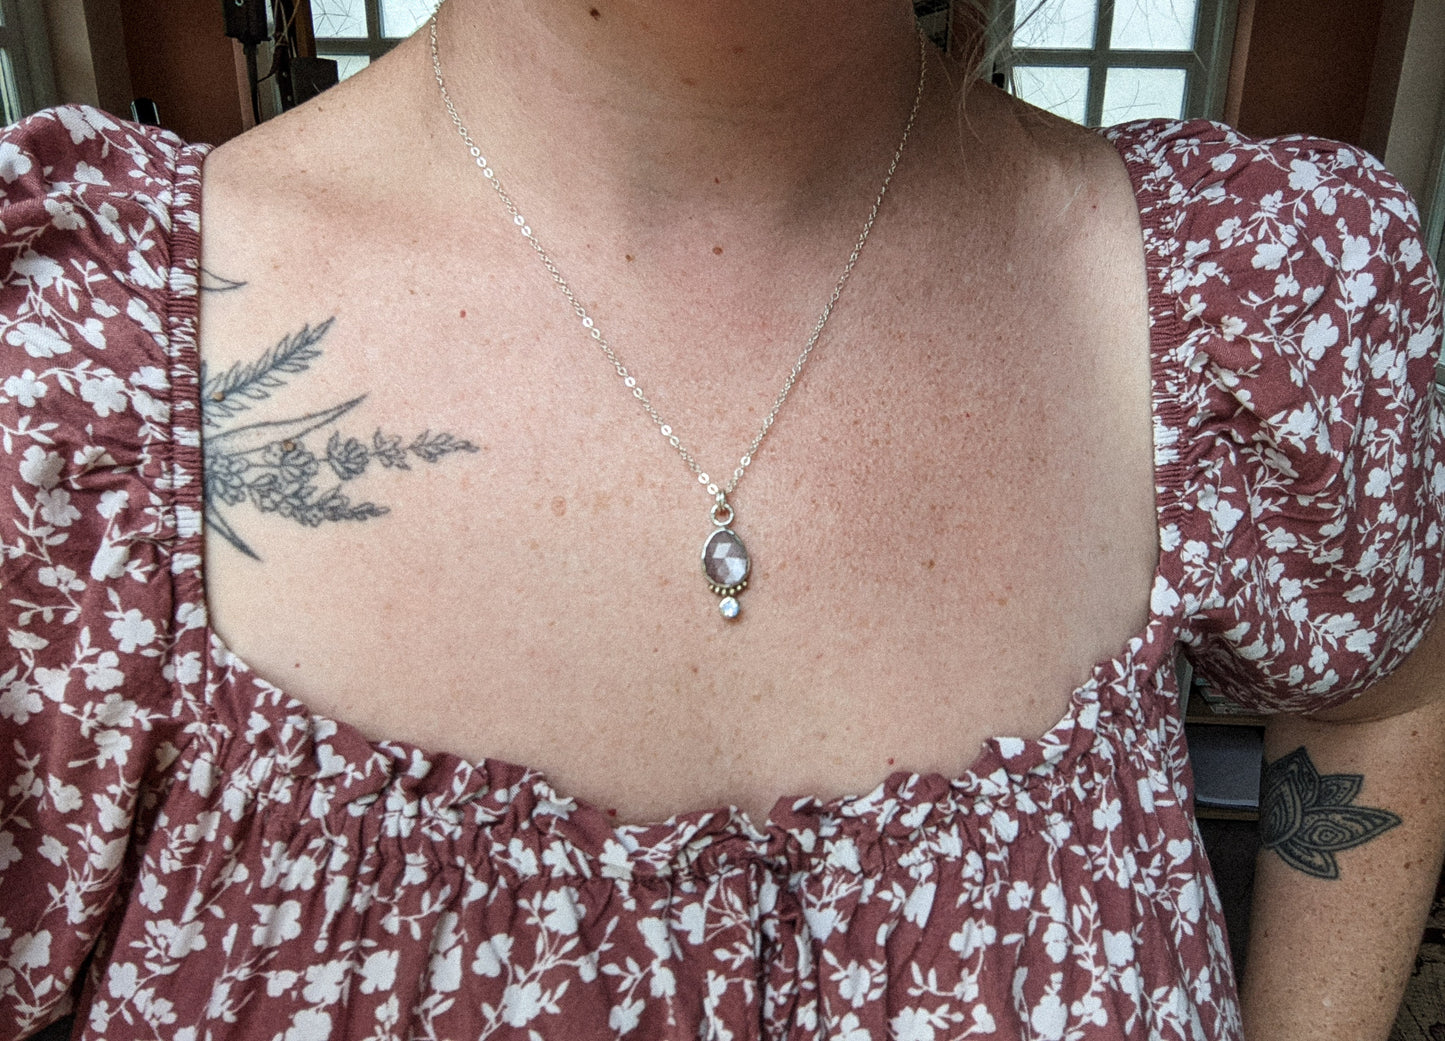 Peach Moonstone and Rainbow Moonstone necklace